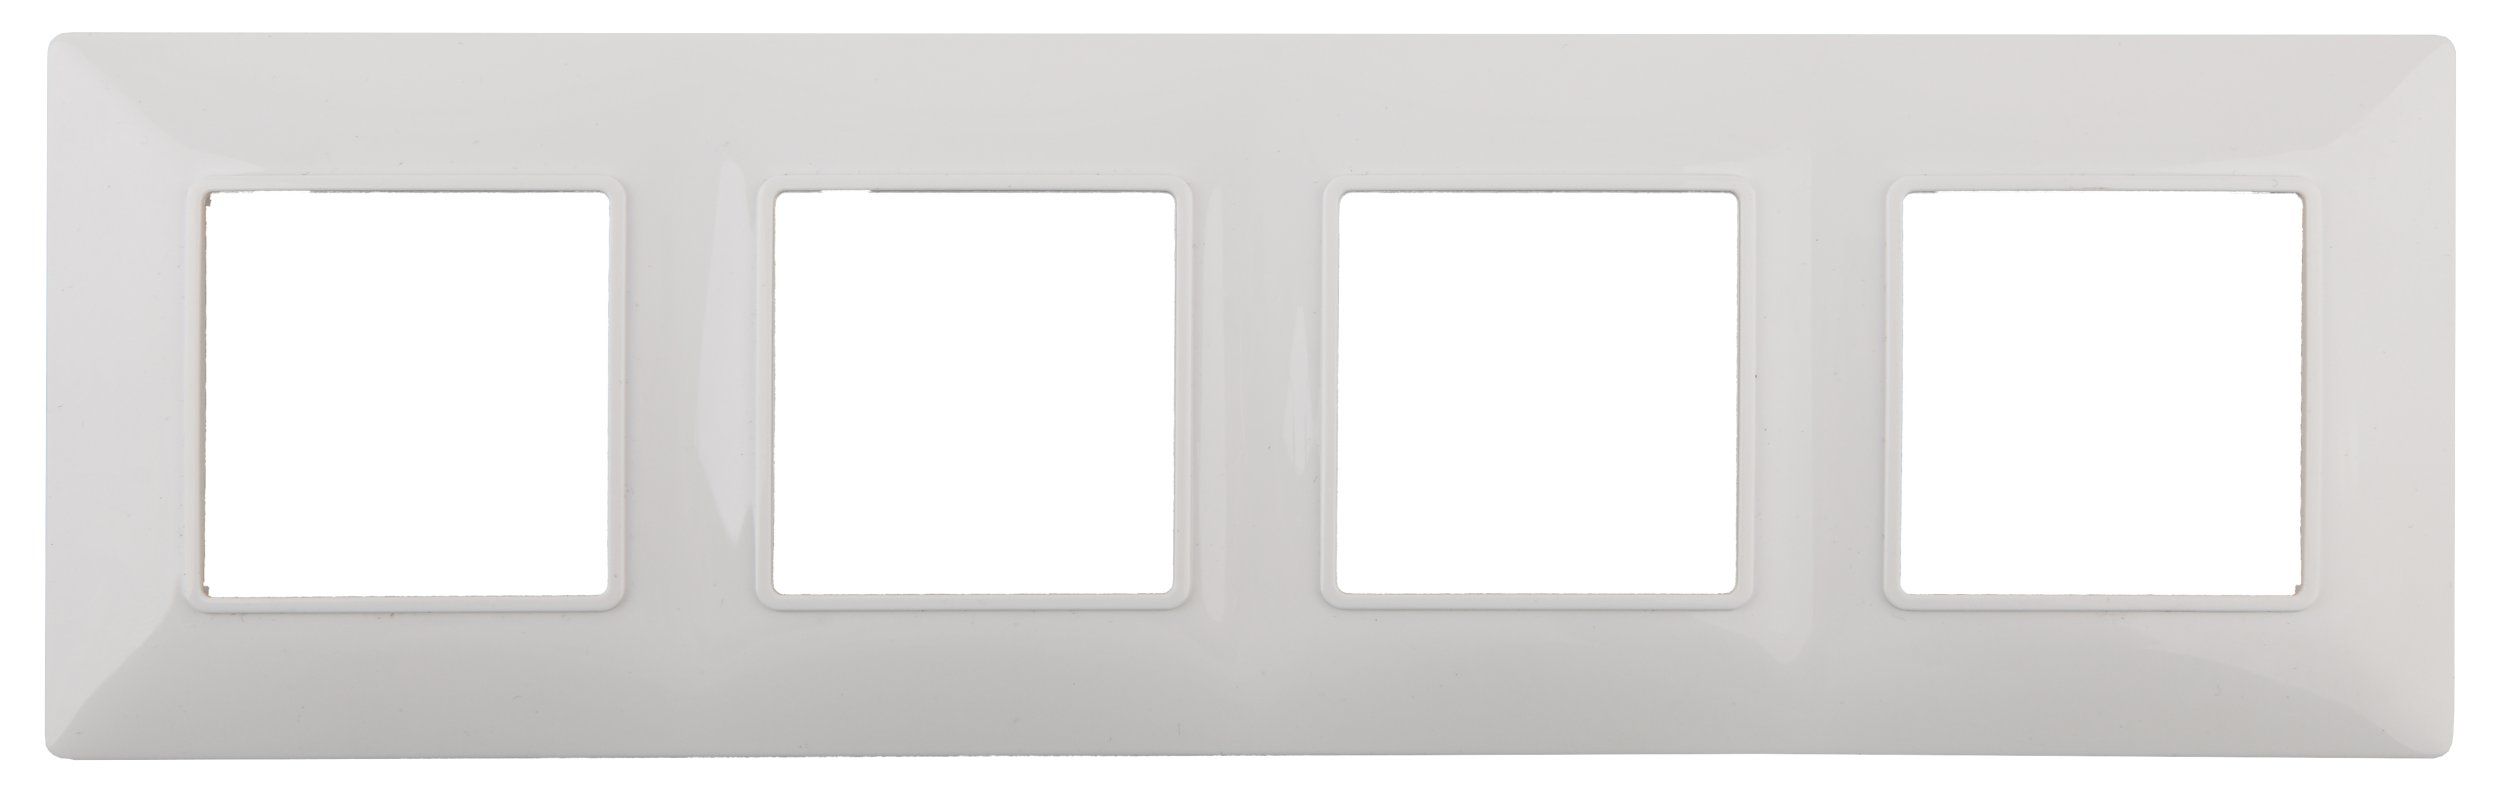 Рамка на 4 поста Эра 14-5004-01, цвет белый - фото 1